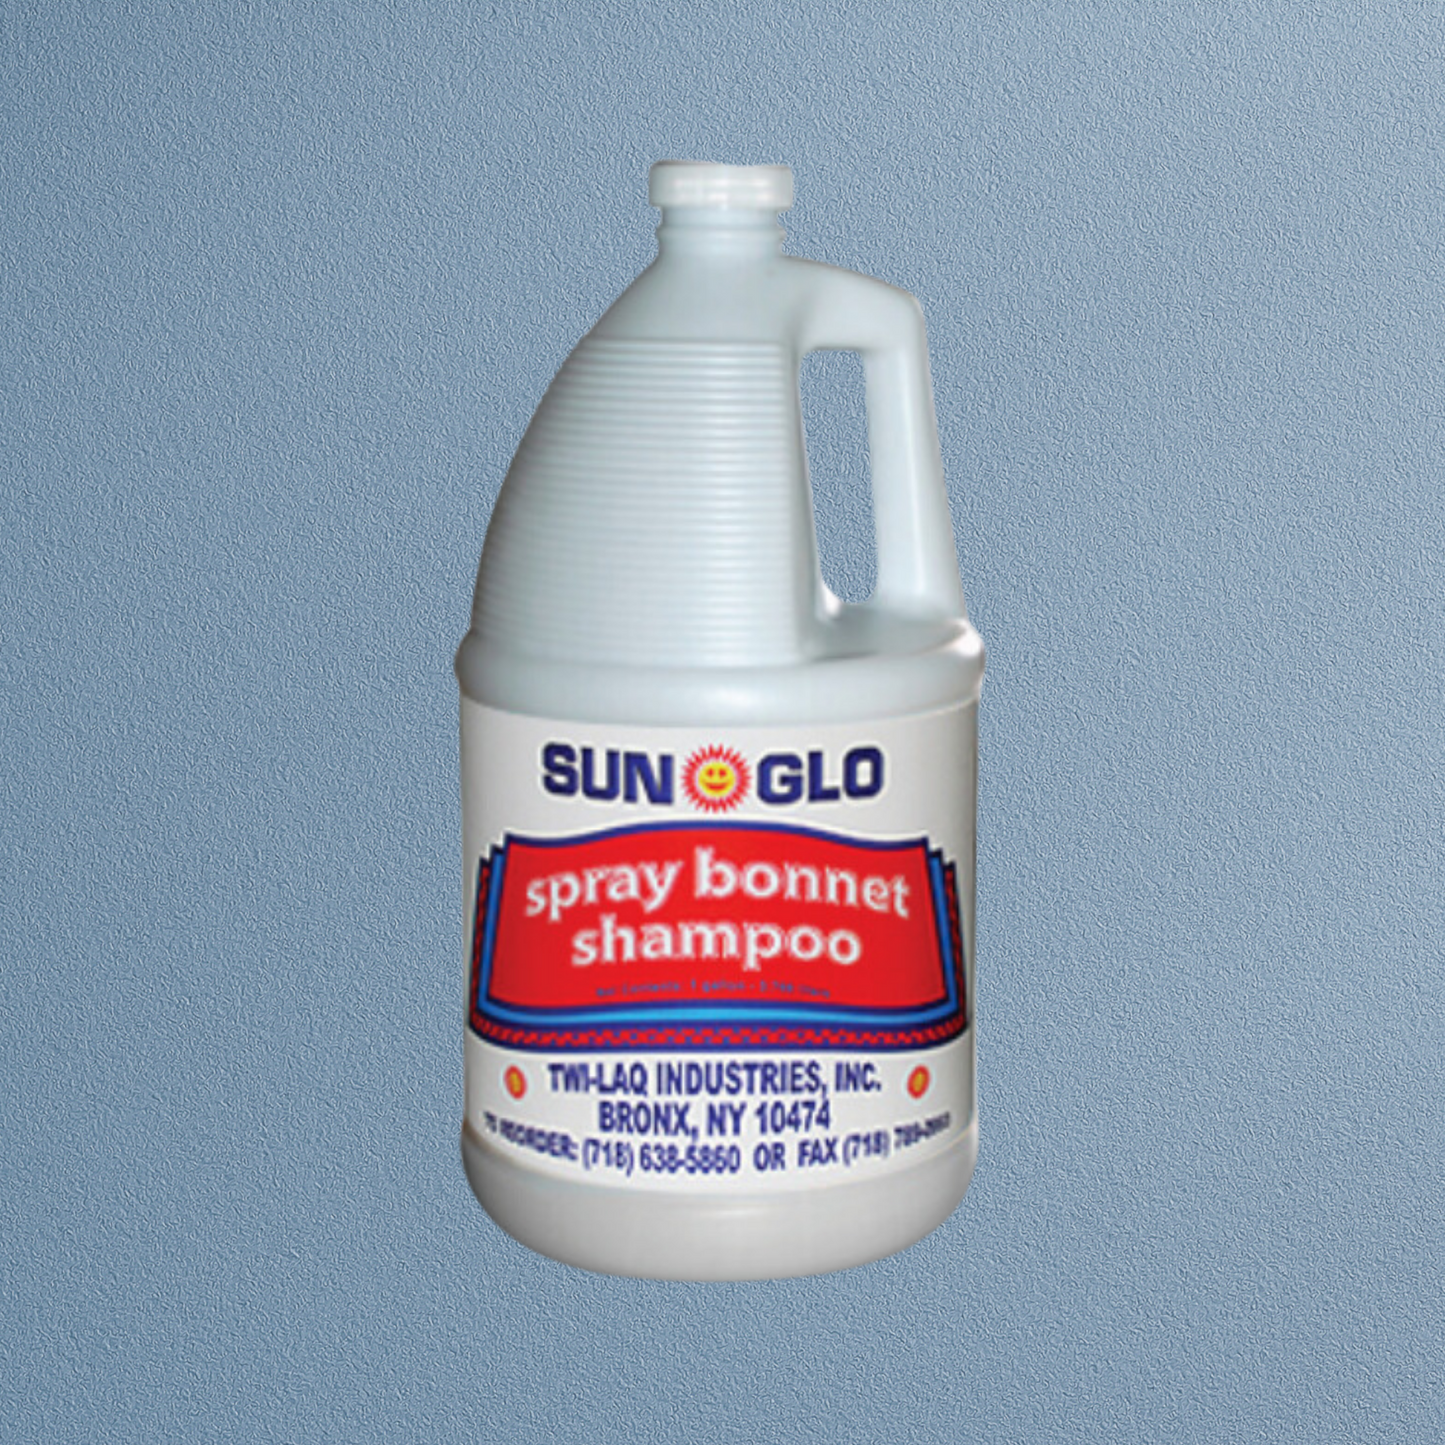 SUN-GLO Spray Bonnet Shampoo - Advanced Formula, Heavy Duty Commercial Strength, High-Performance Carpet Care - (4x1 Gallon Case)